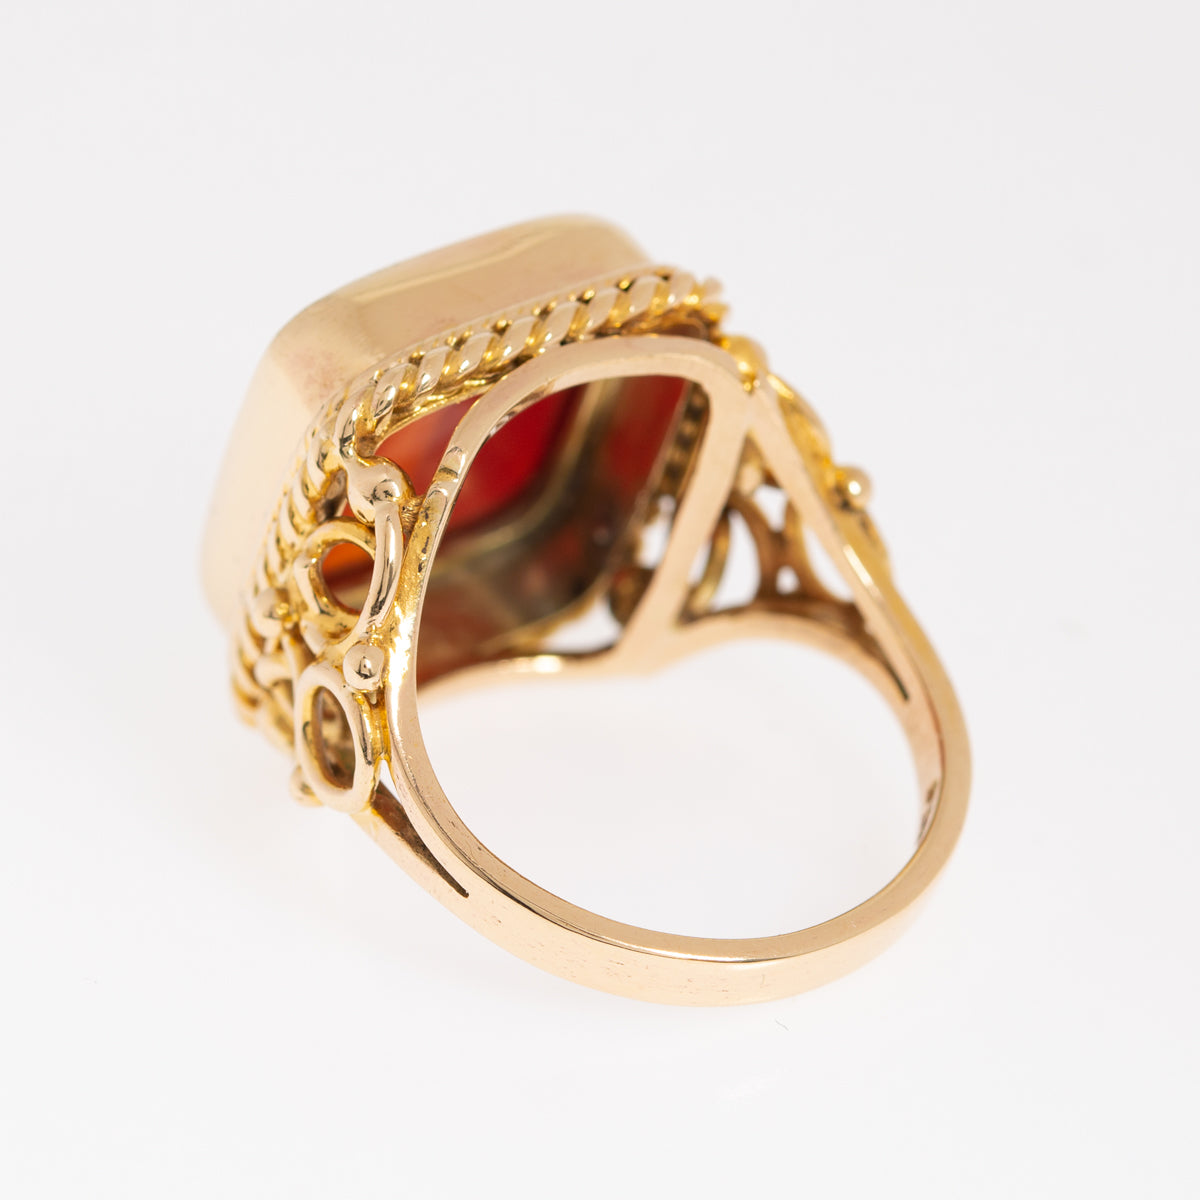 Vintage 9ct Gold Large Signet/Dress Ring Banded Carnelian & Fancy Mount (A1250)